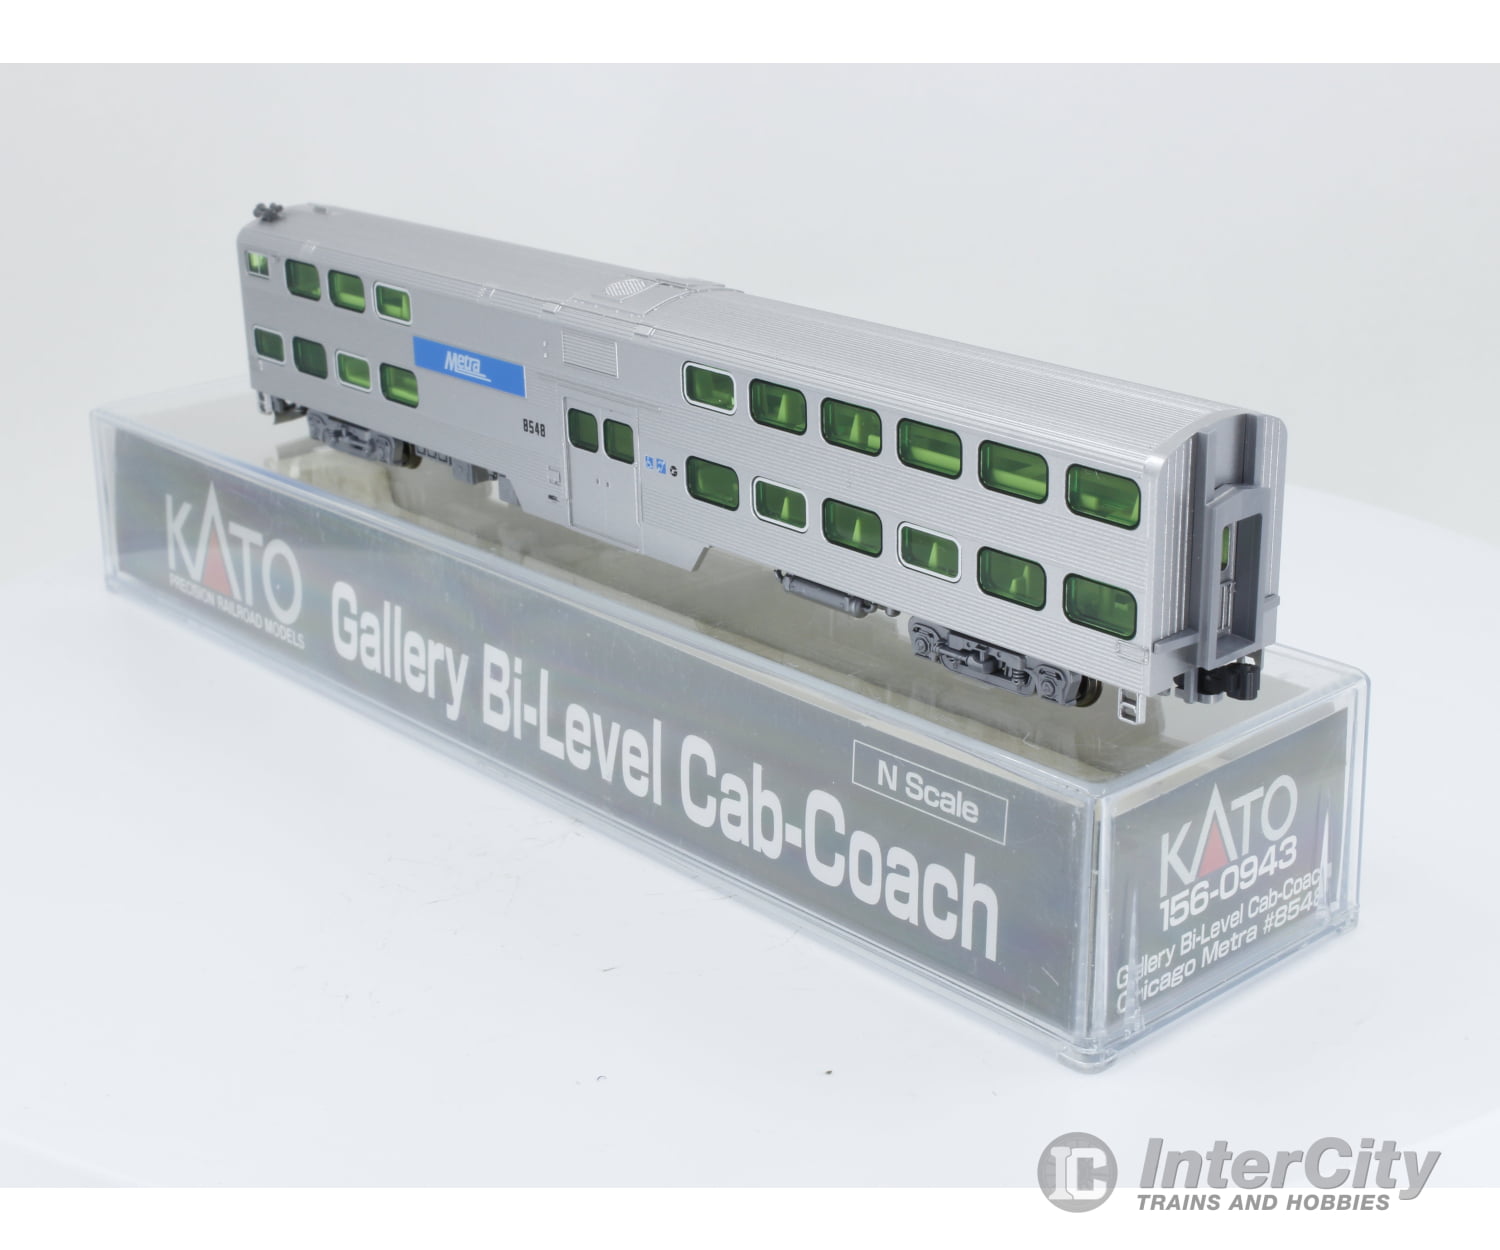 Kato 156-0943 N Gallery Bi-Level Cab-Coach Chicago Metra (Metx) 8548 (1) Passenger Cars